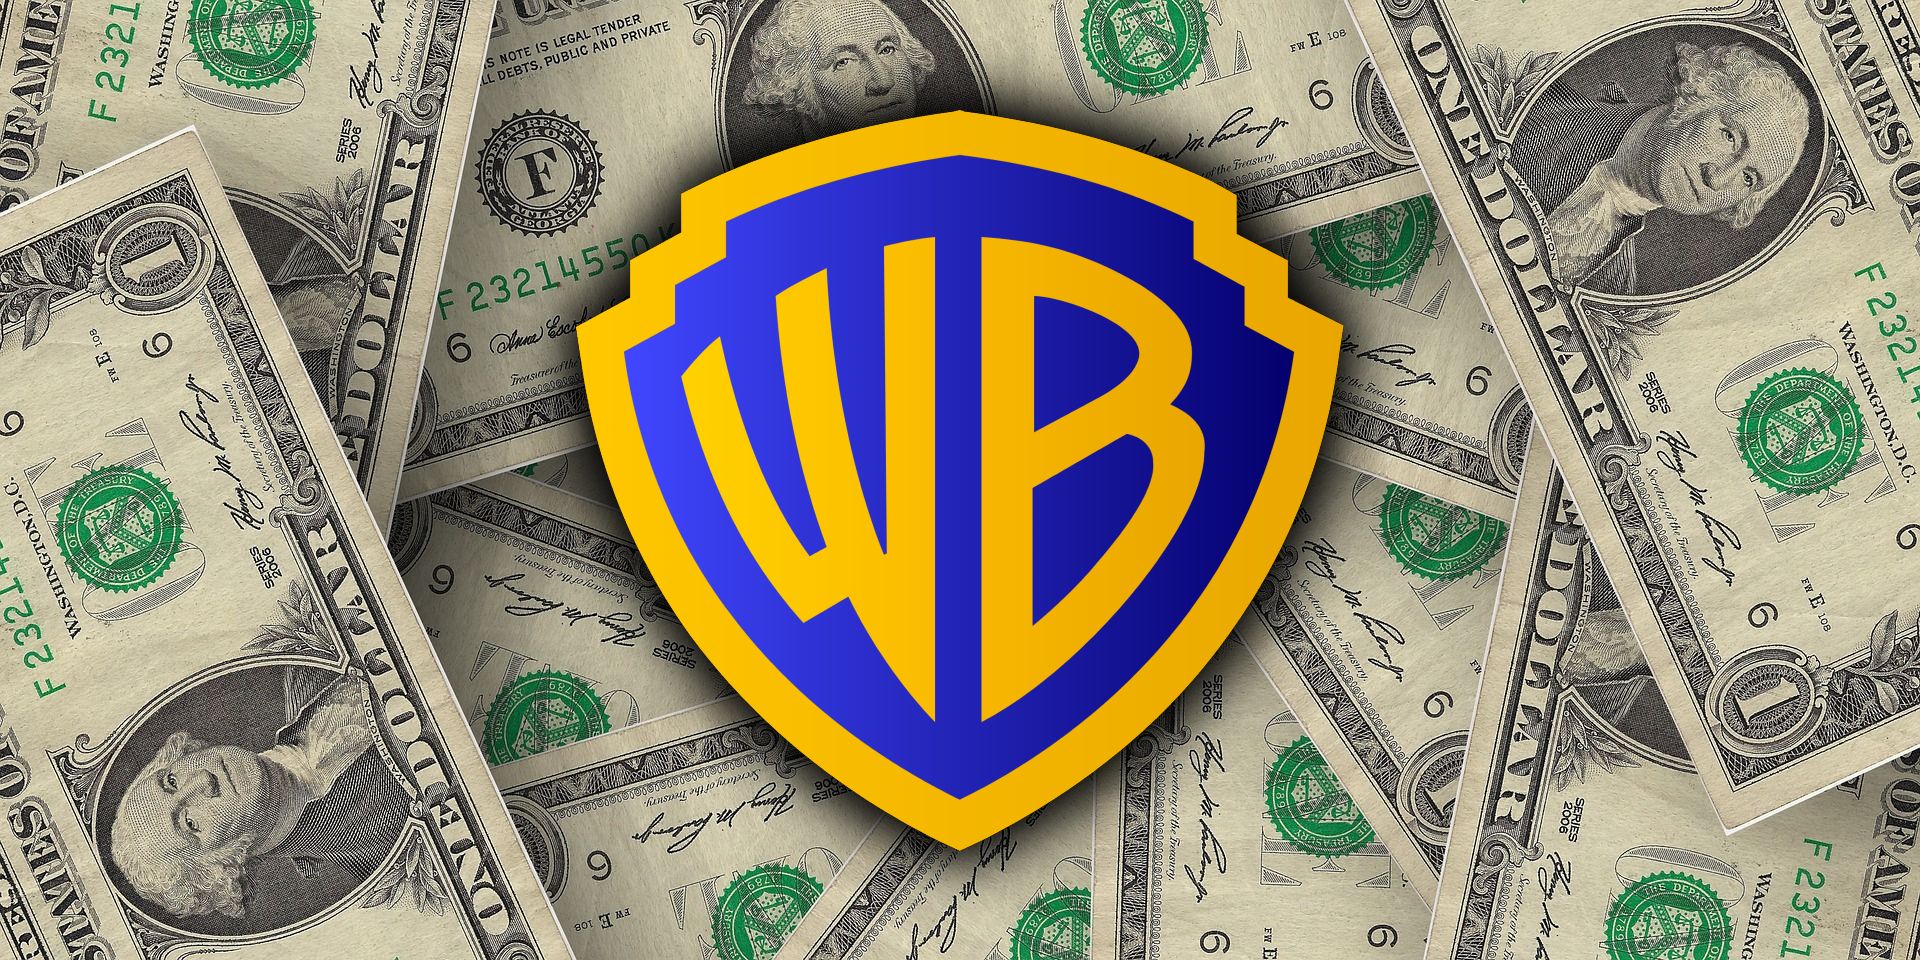 Warner Bros Discovery is Losing BILLIONS of Dollars 